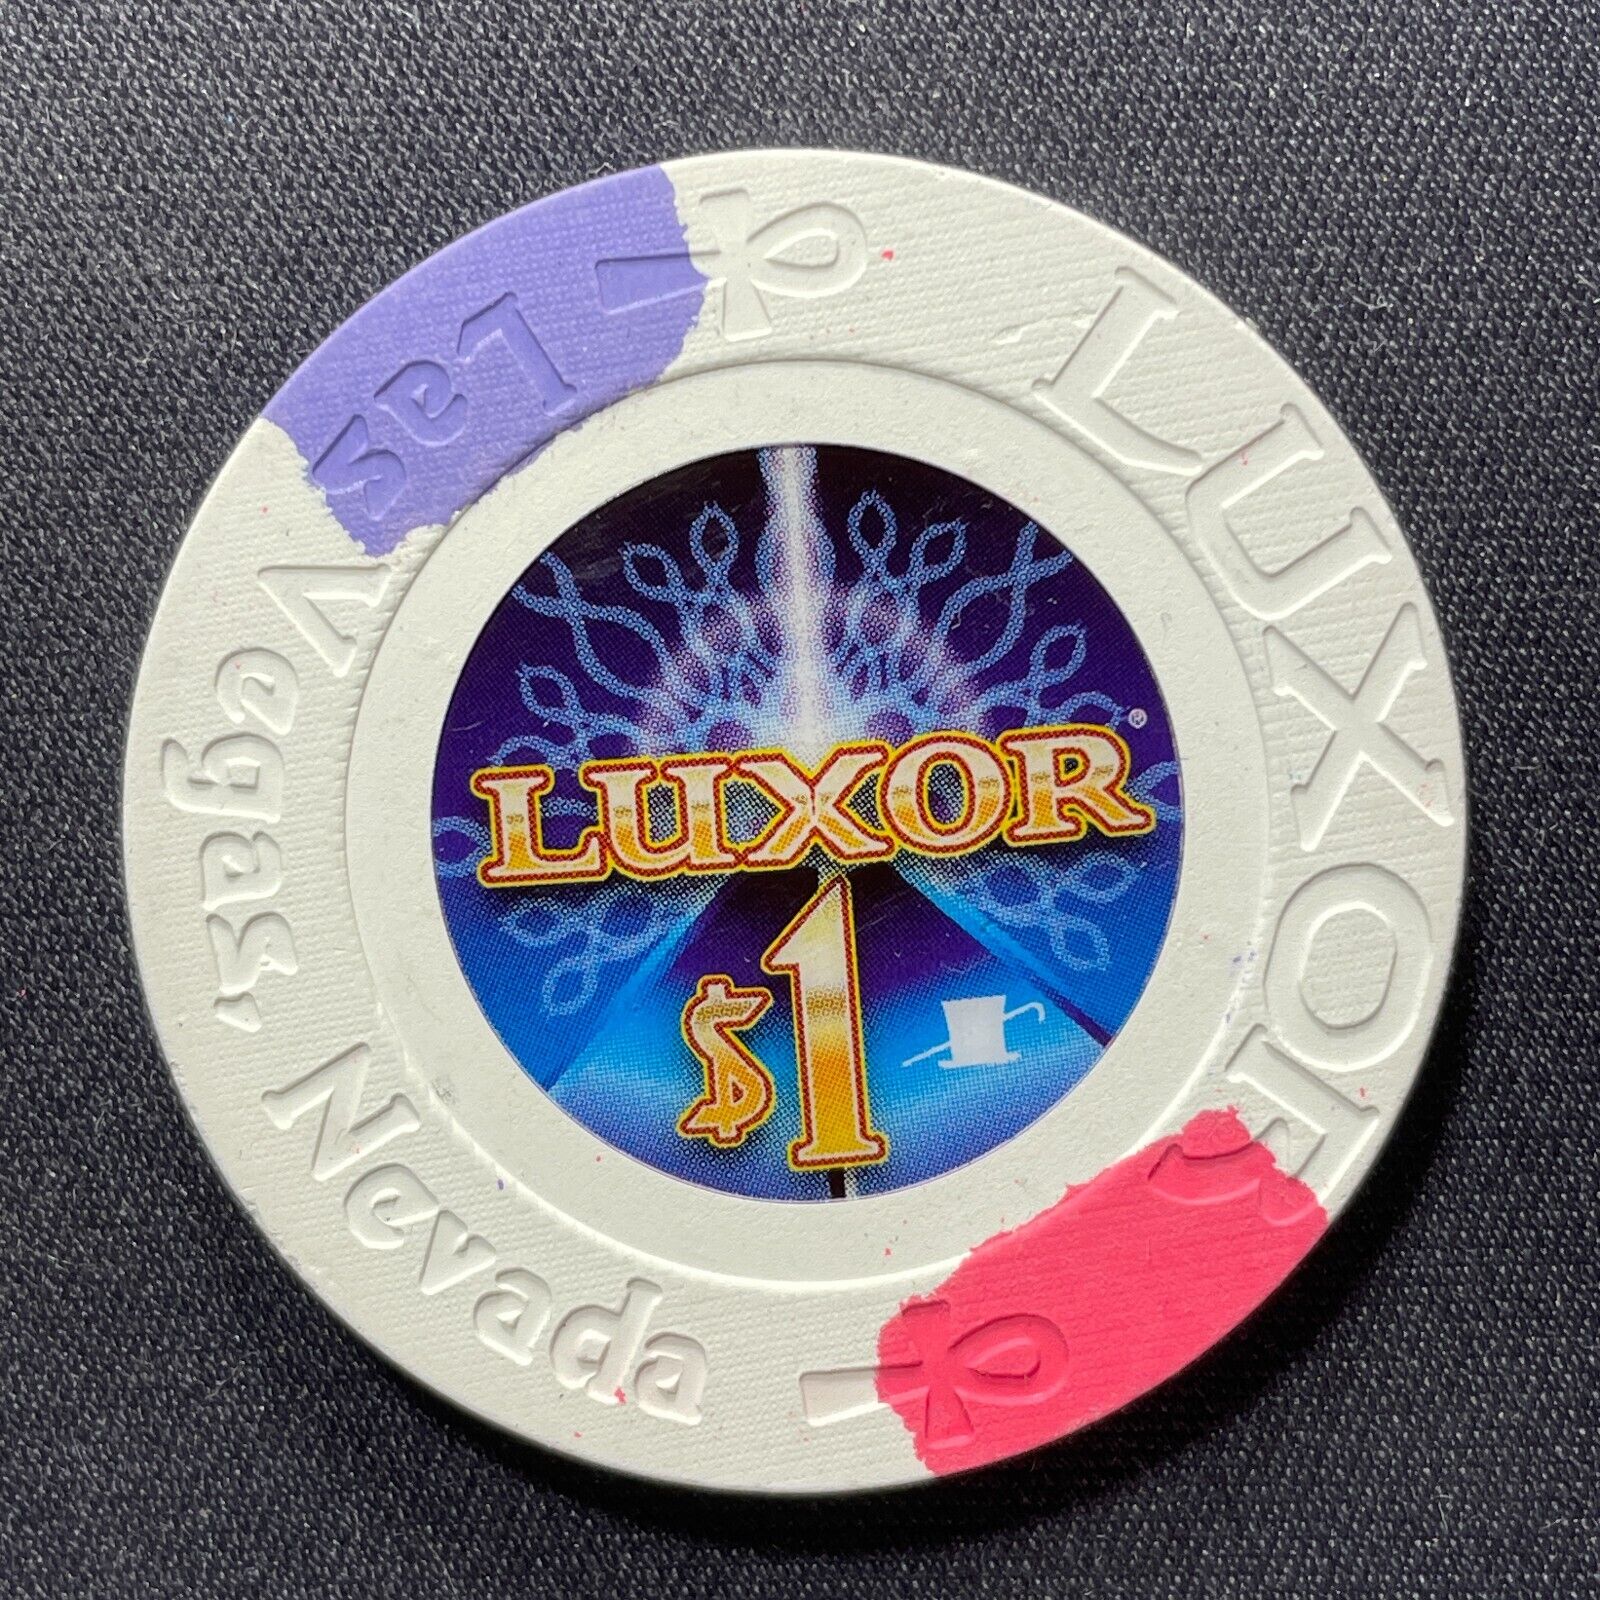 Luxor Las Vegas $1 casino chip house chip 2010 gaming token poker LV1